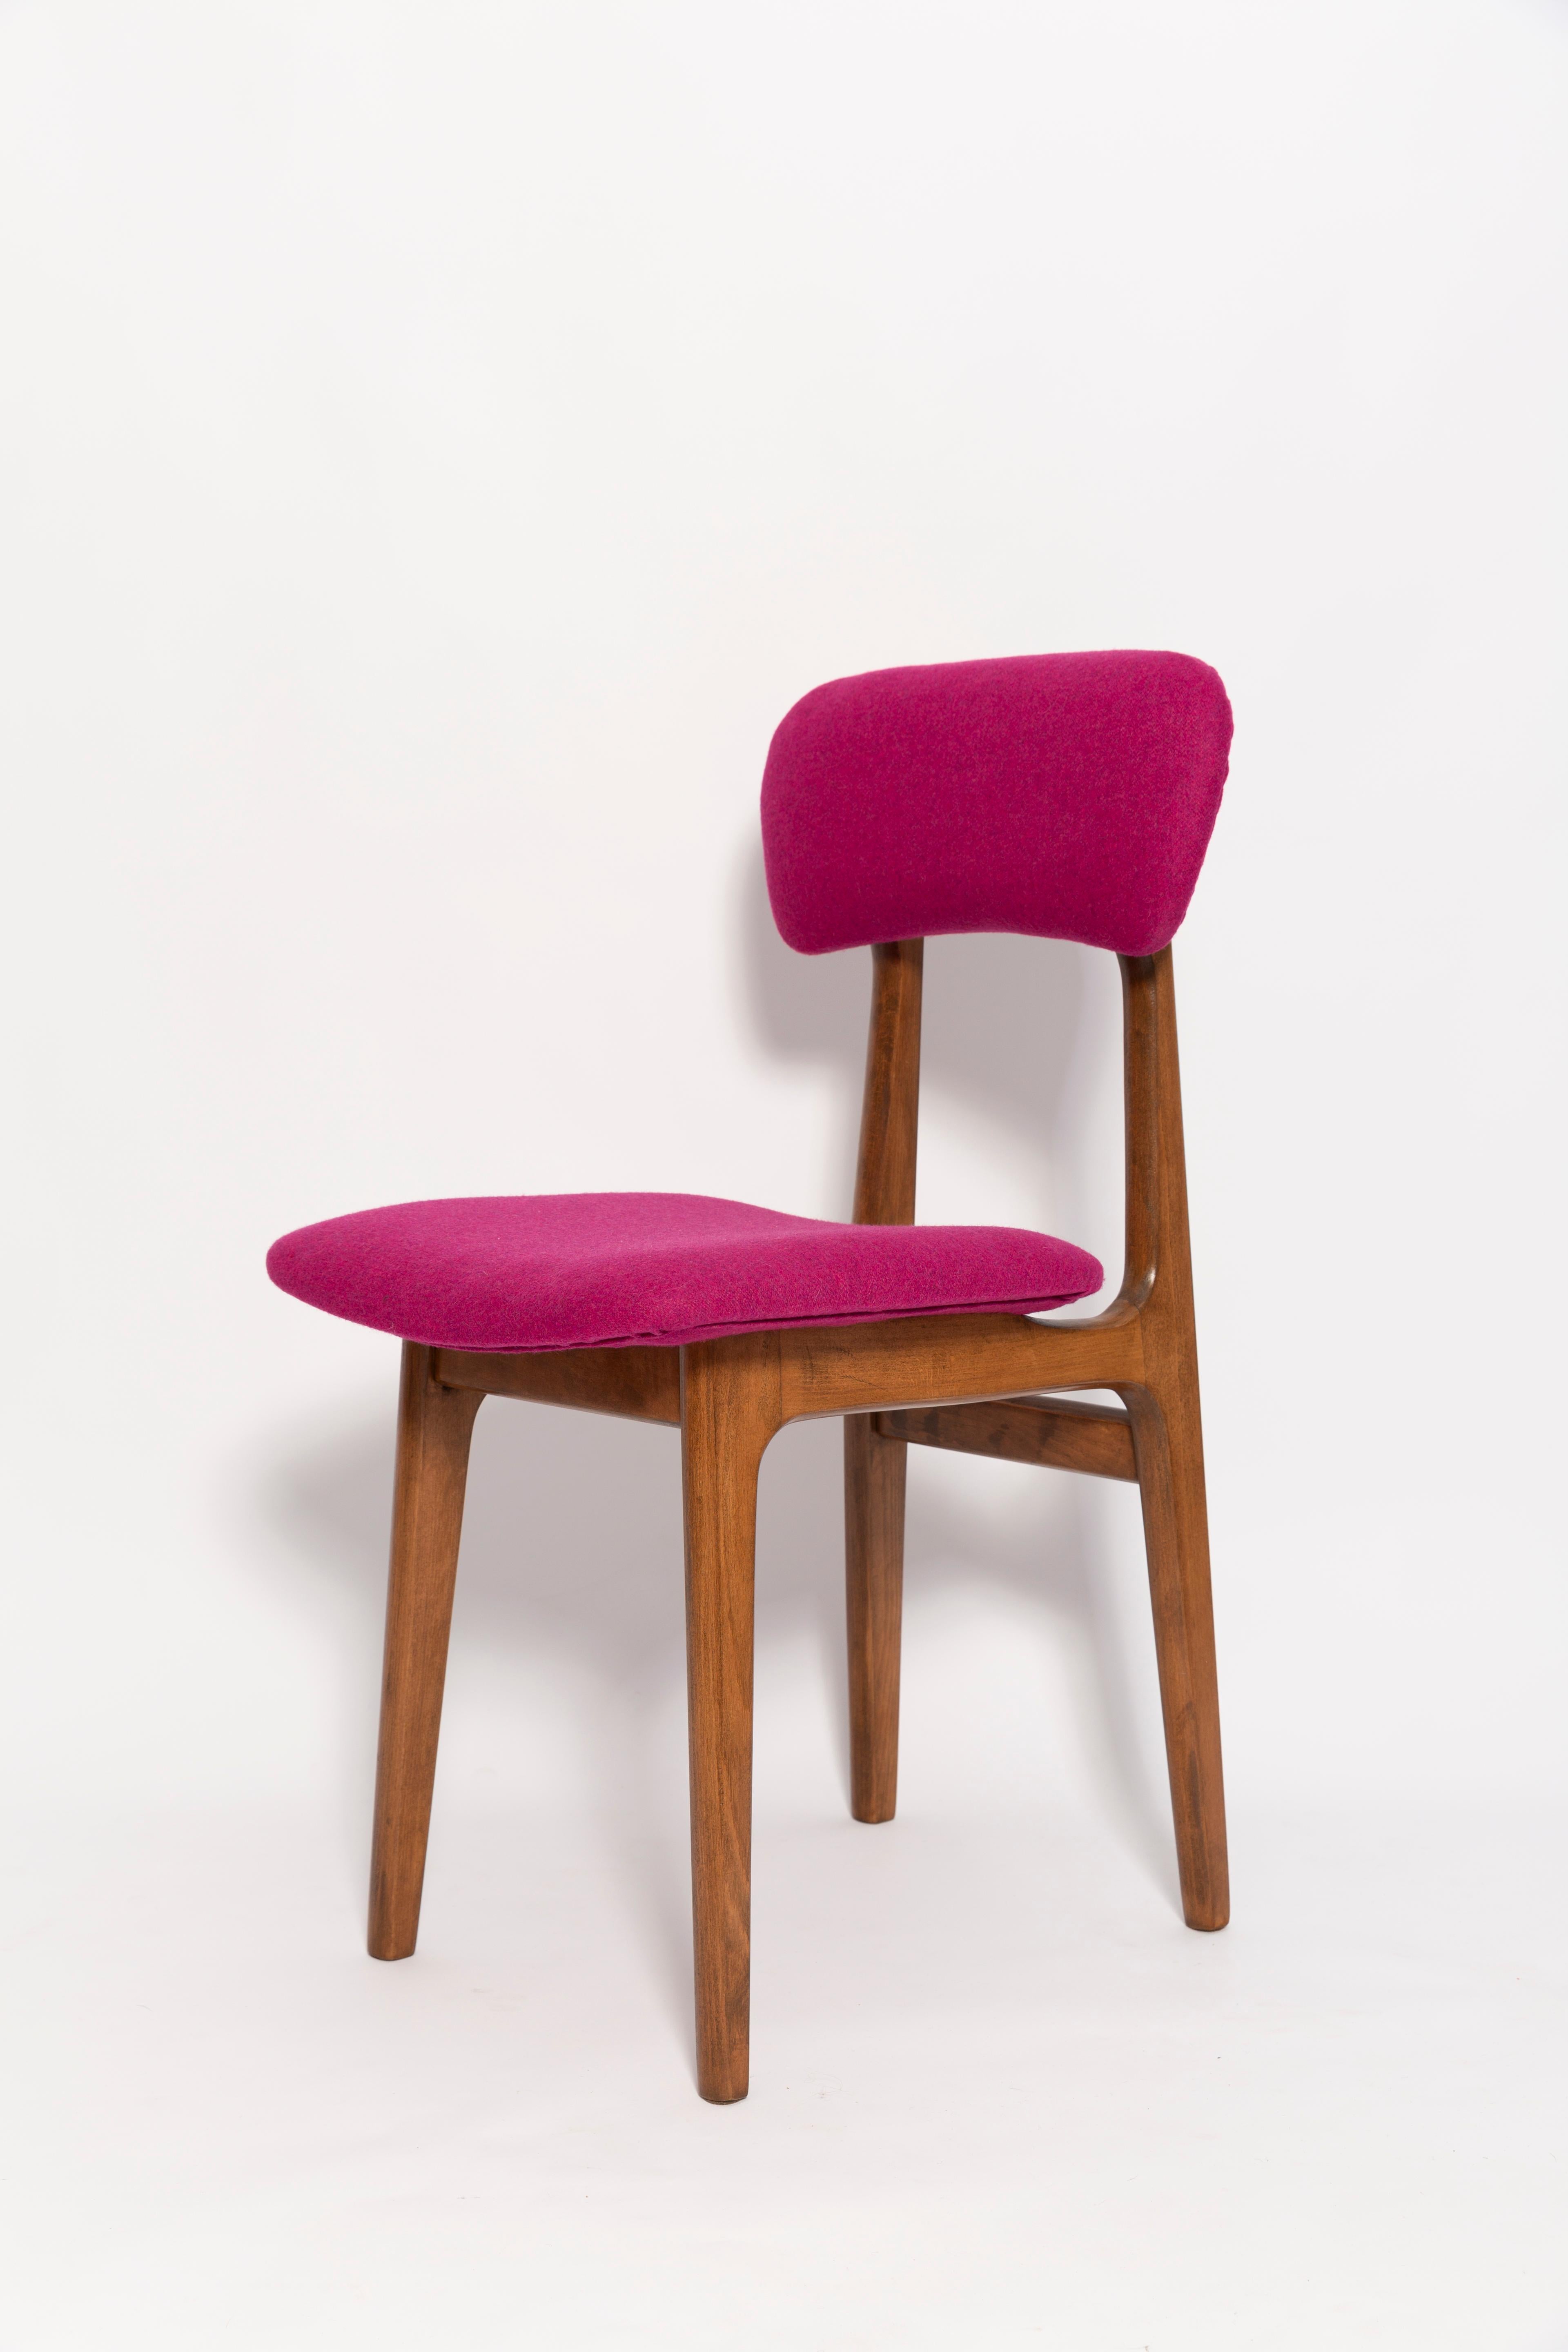 Set of Five Mid Century Wool Chairs, Rajmund Halas, Europe, 1960s For Sale 4